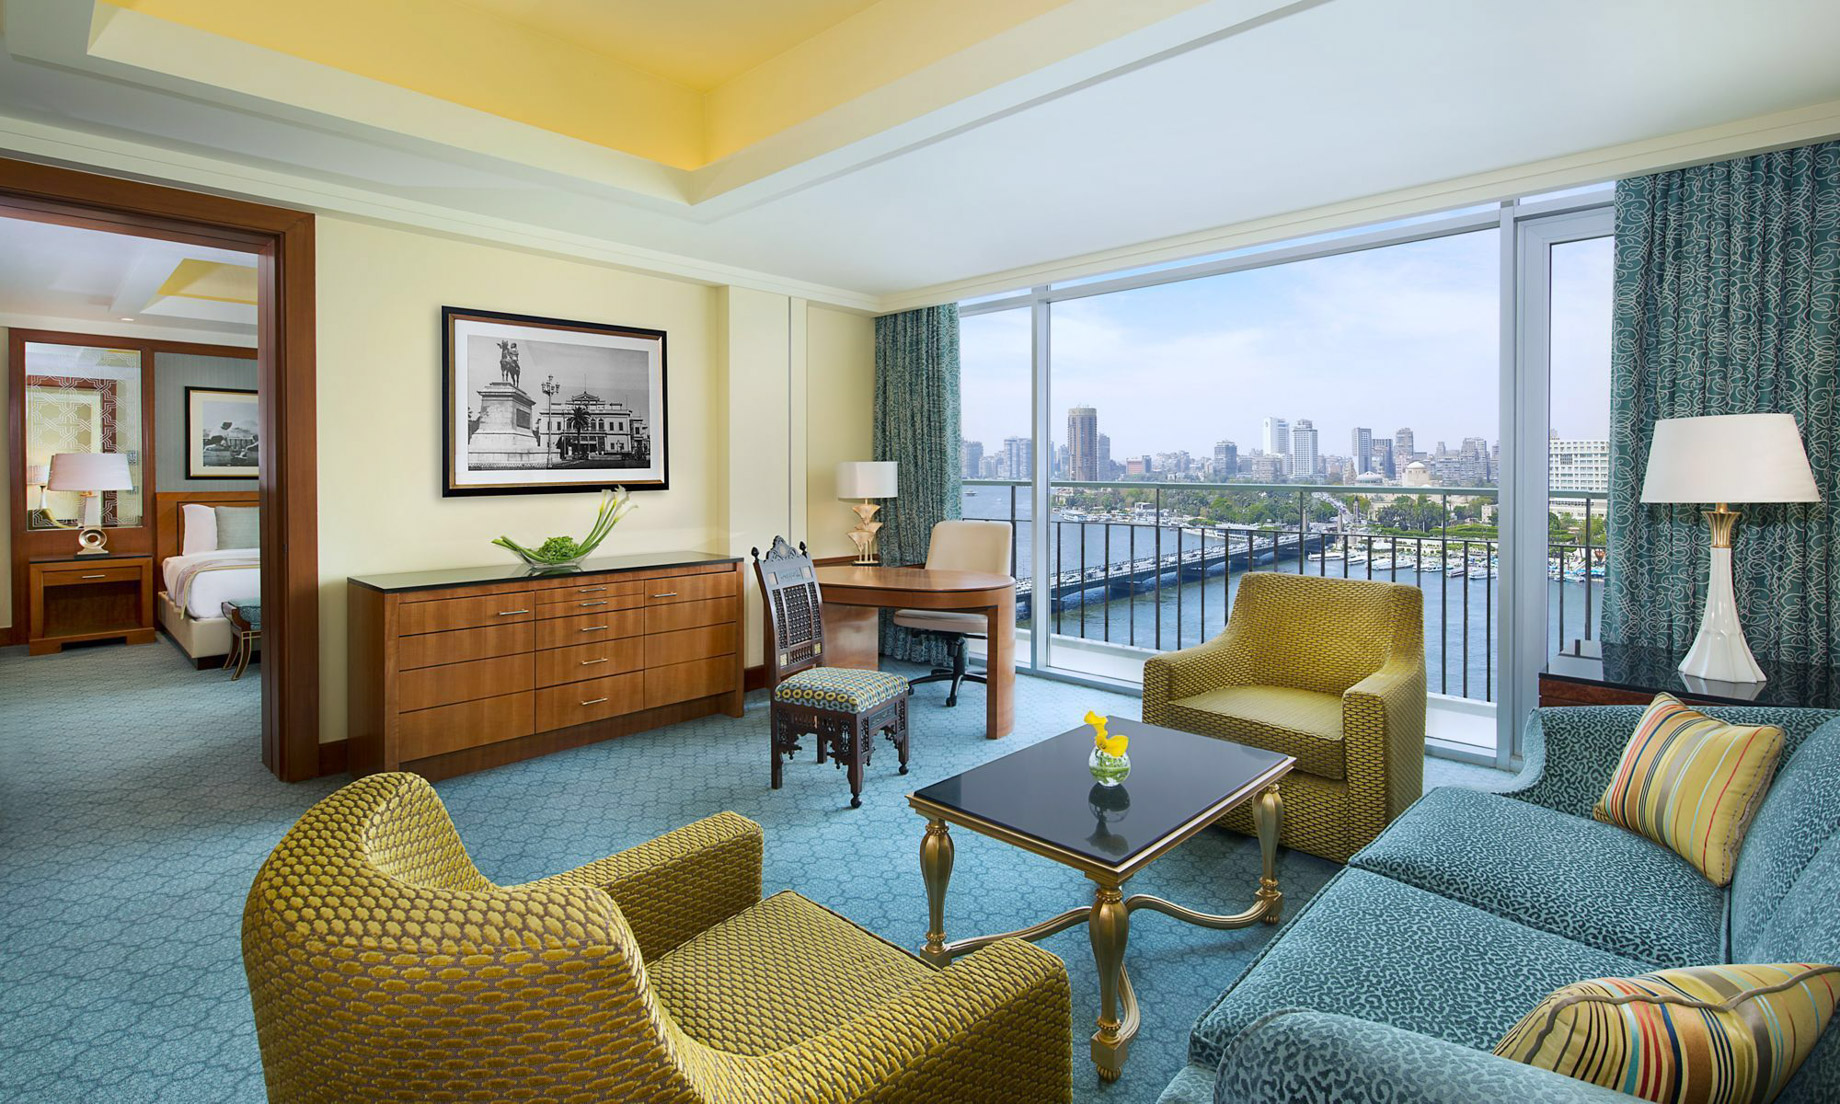 The Nile Ritz-Carlton, Cairo Hotel – Cairo, Egypt – The Ritz-Carlton Suite